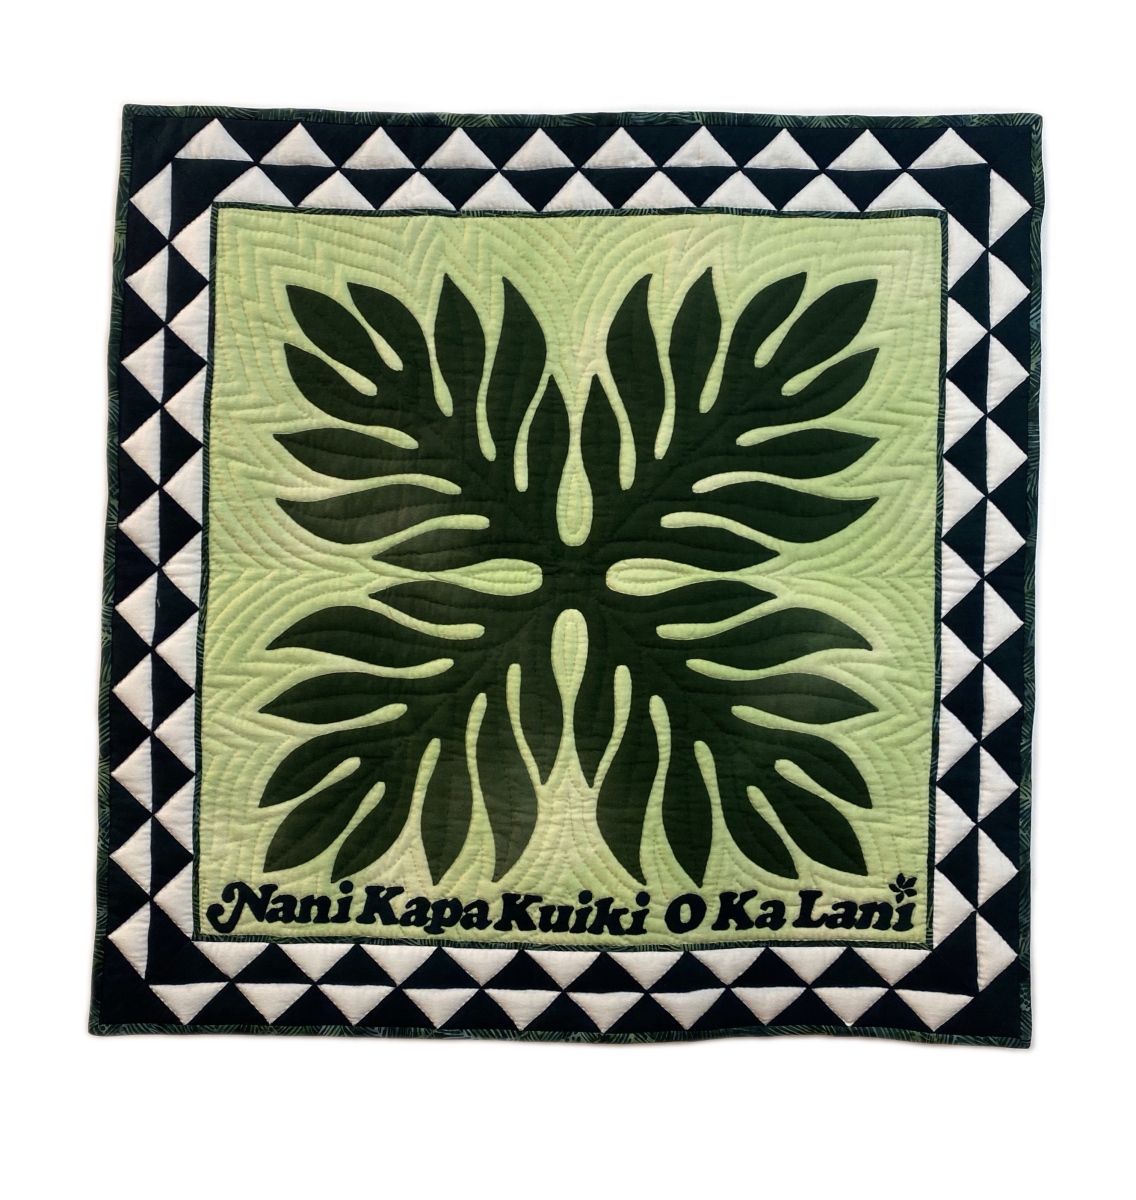 Kula’s Original Kapa Kuiki